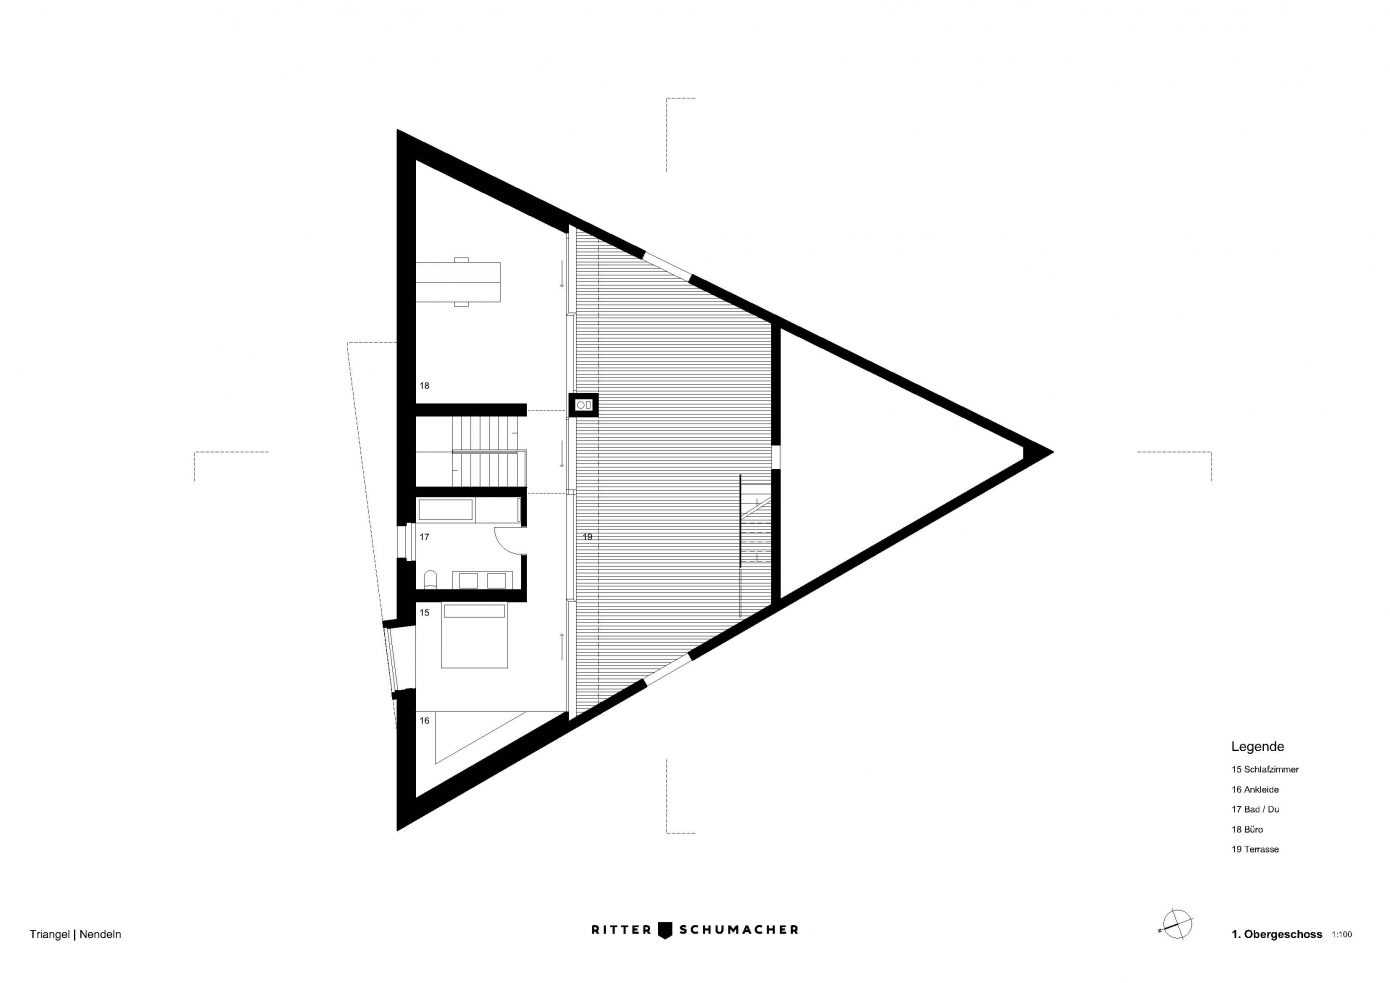 Triangle by Ritter Schumacher